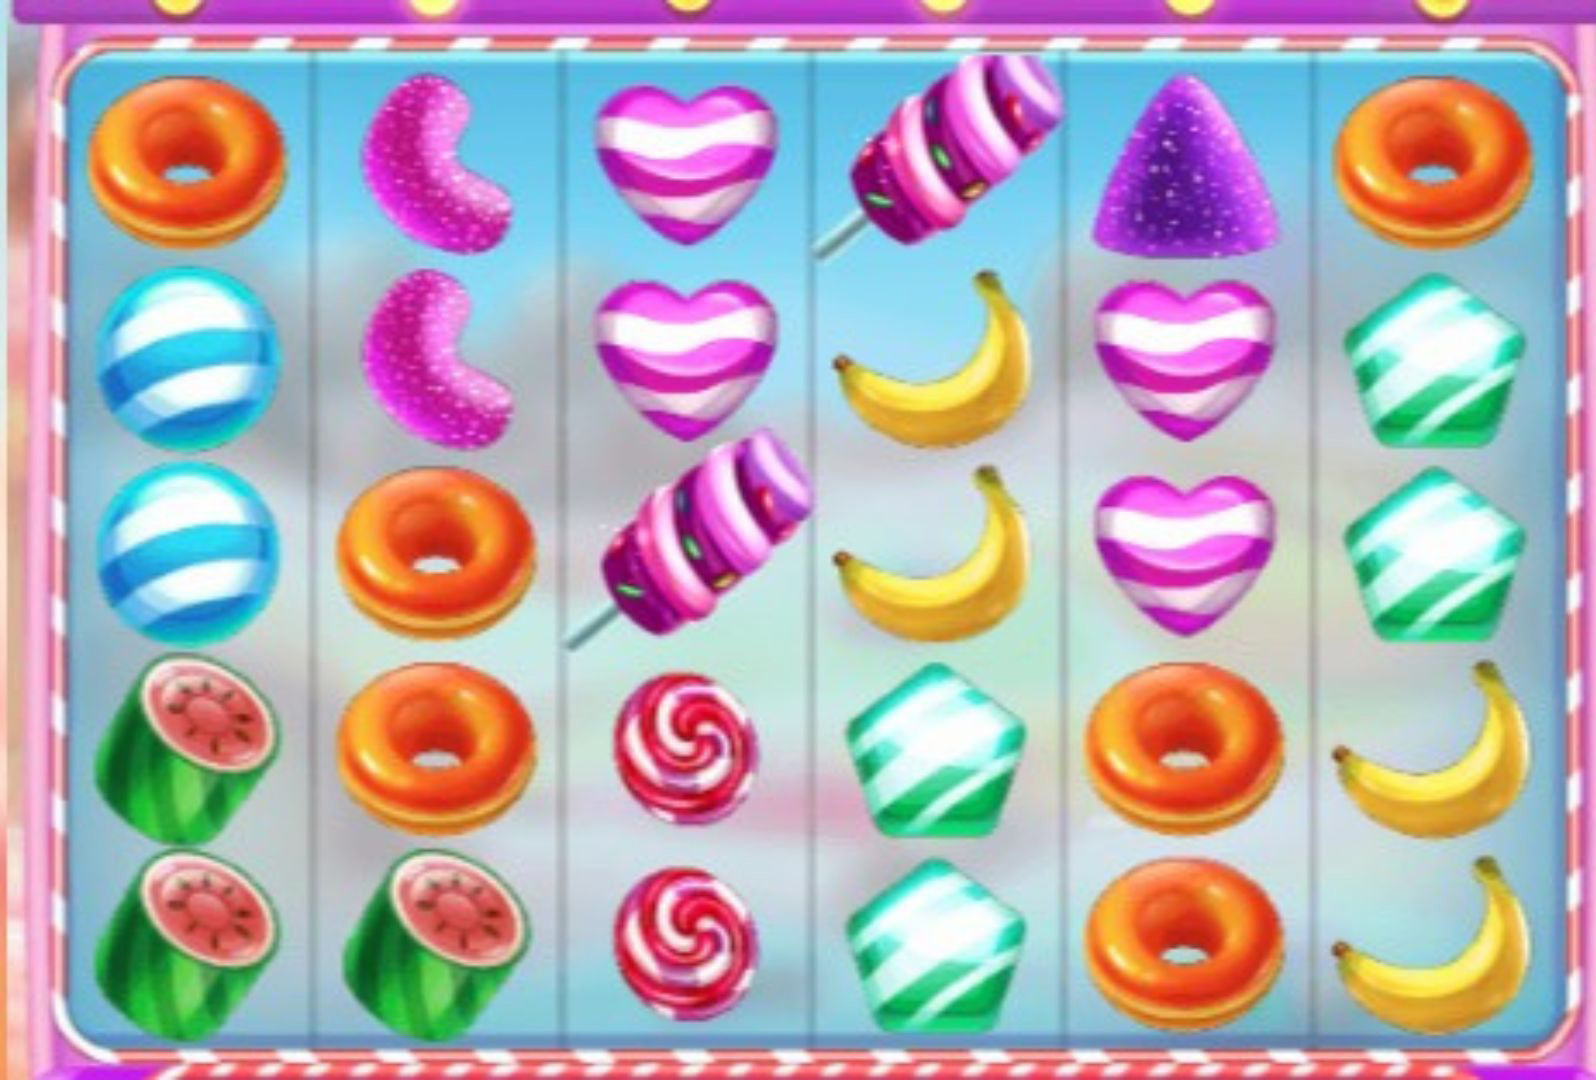 gameplay slot sugary bonanza